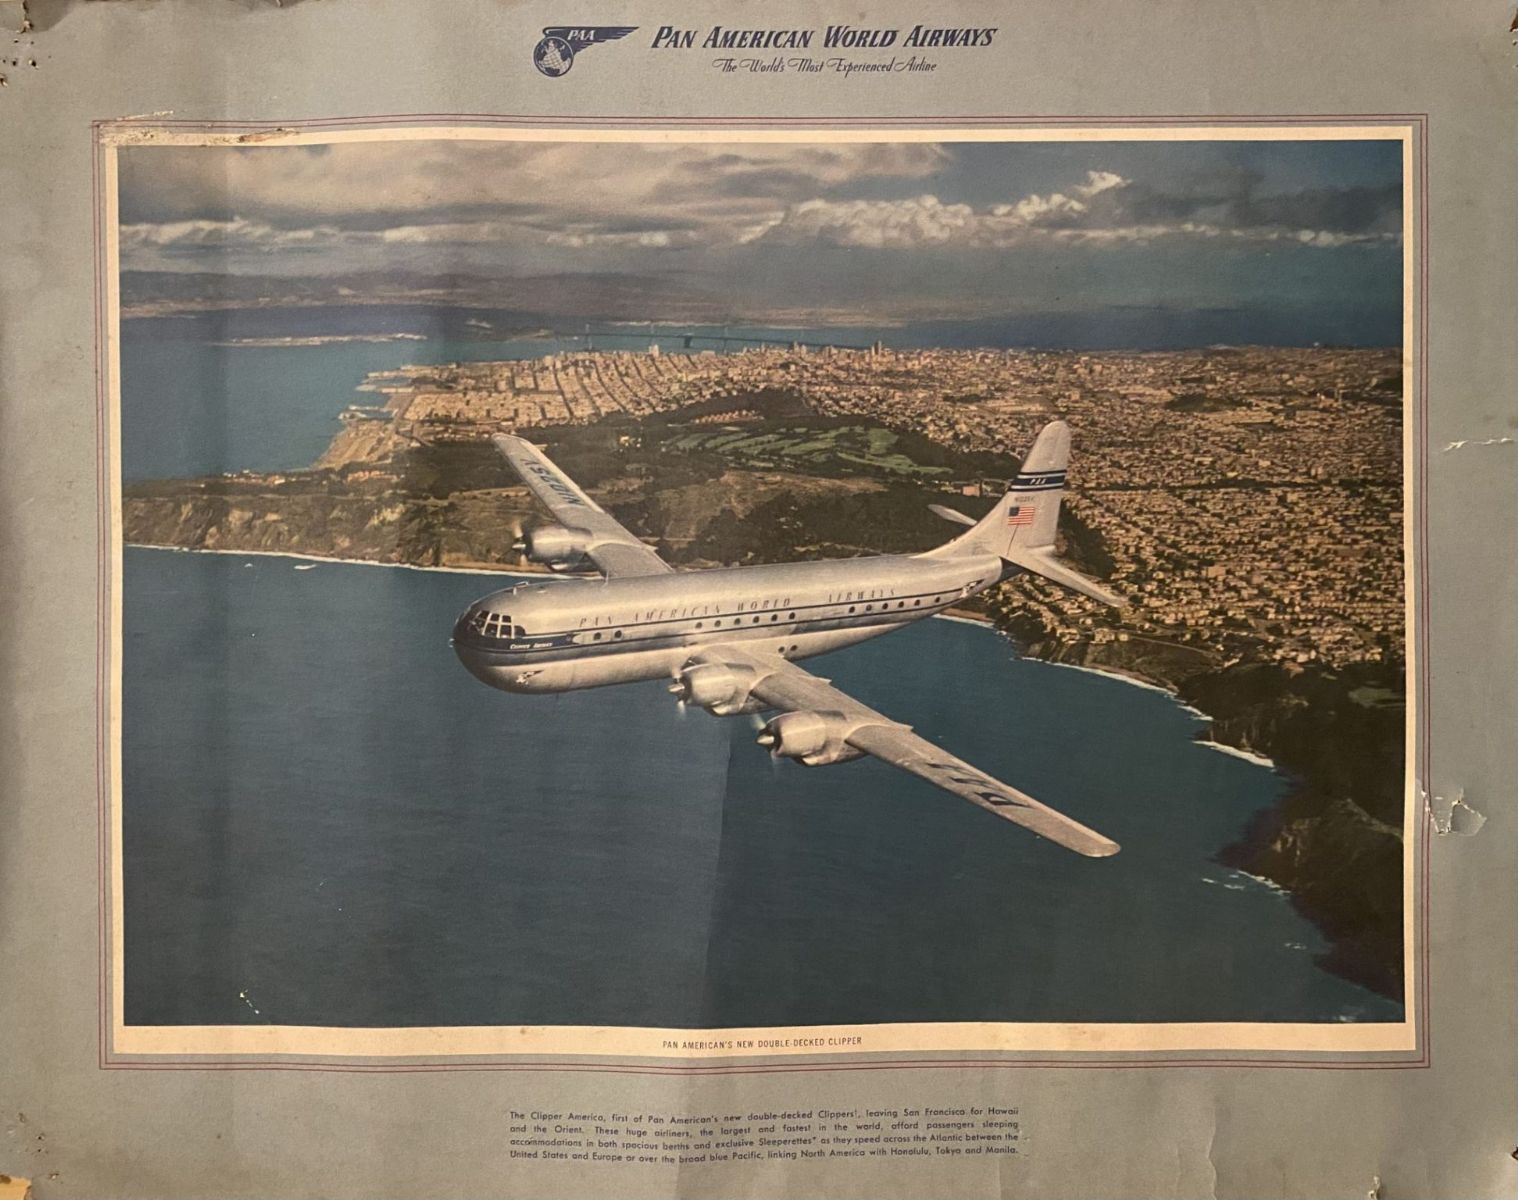 VINTAGE POSTER: Pan American World Airways - Boeing 377 Stratocruiser 1949